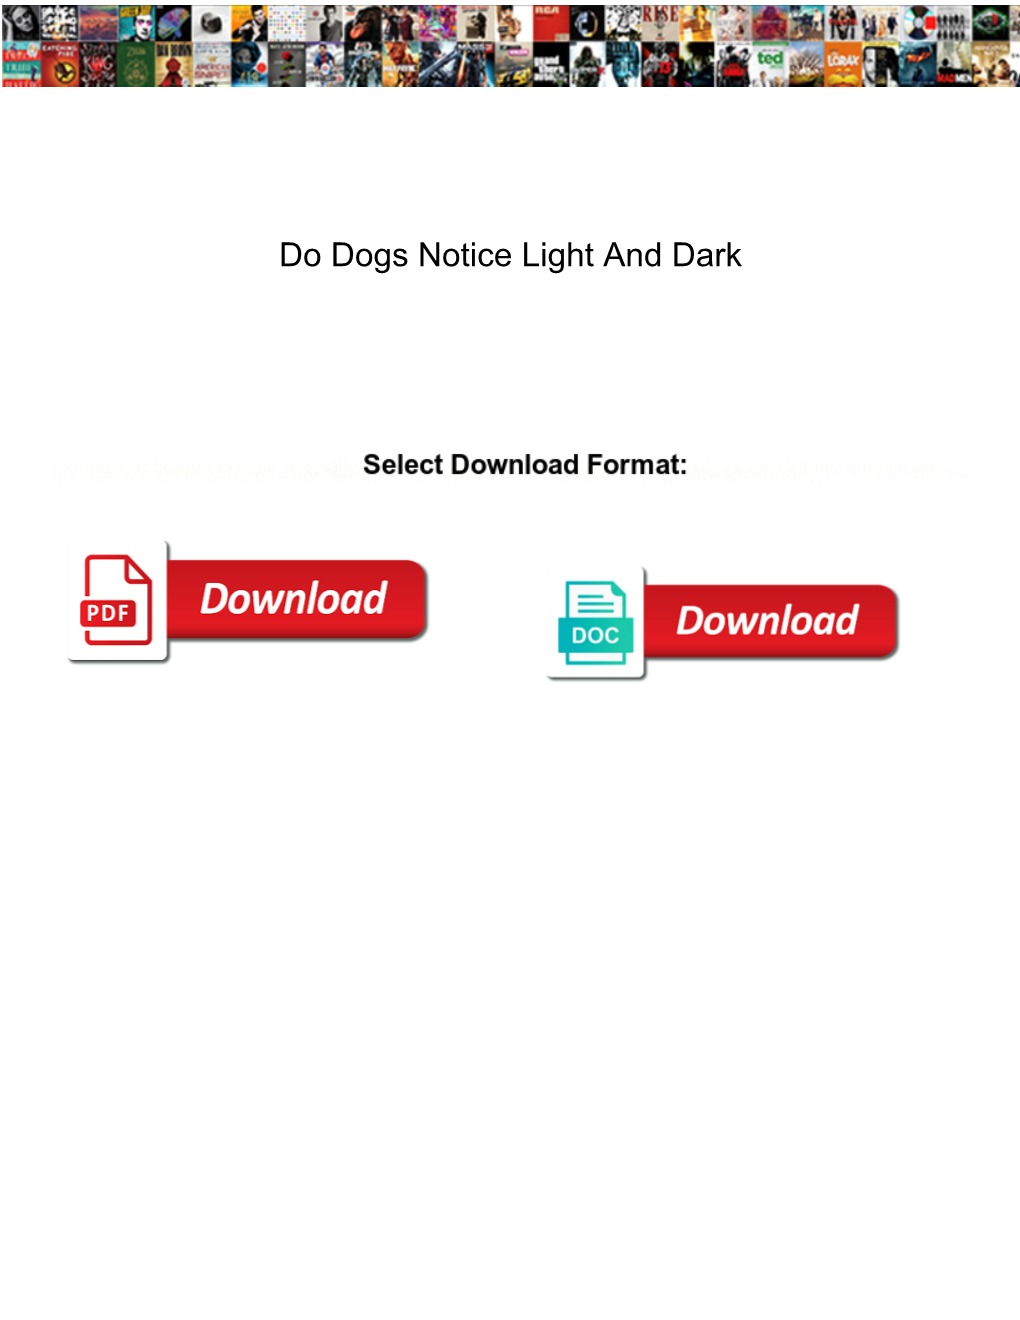 Do Dogs Notice Light and Dark